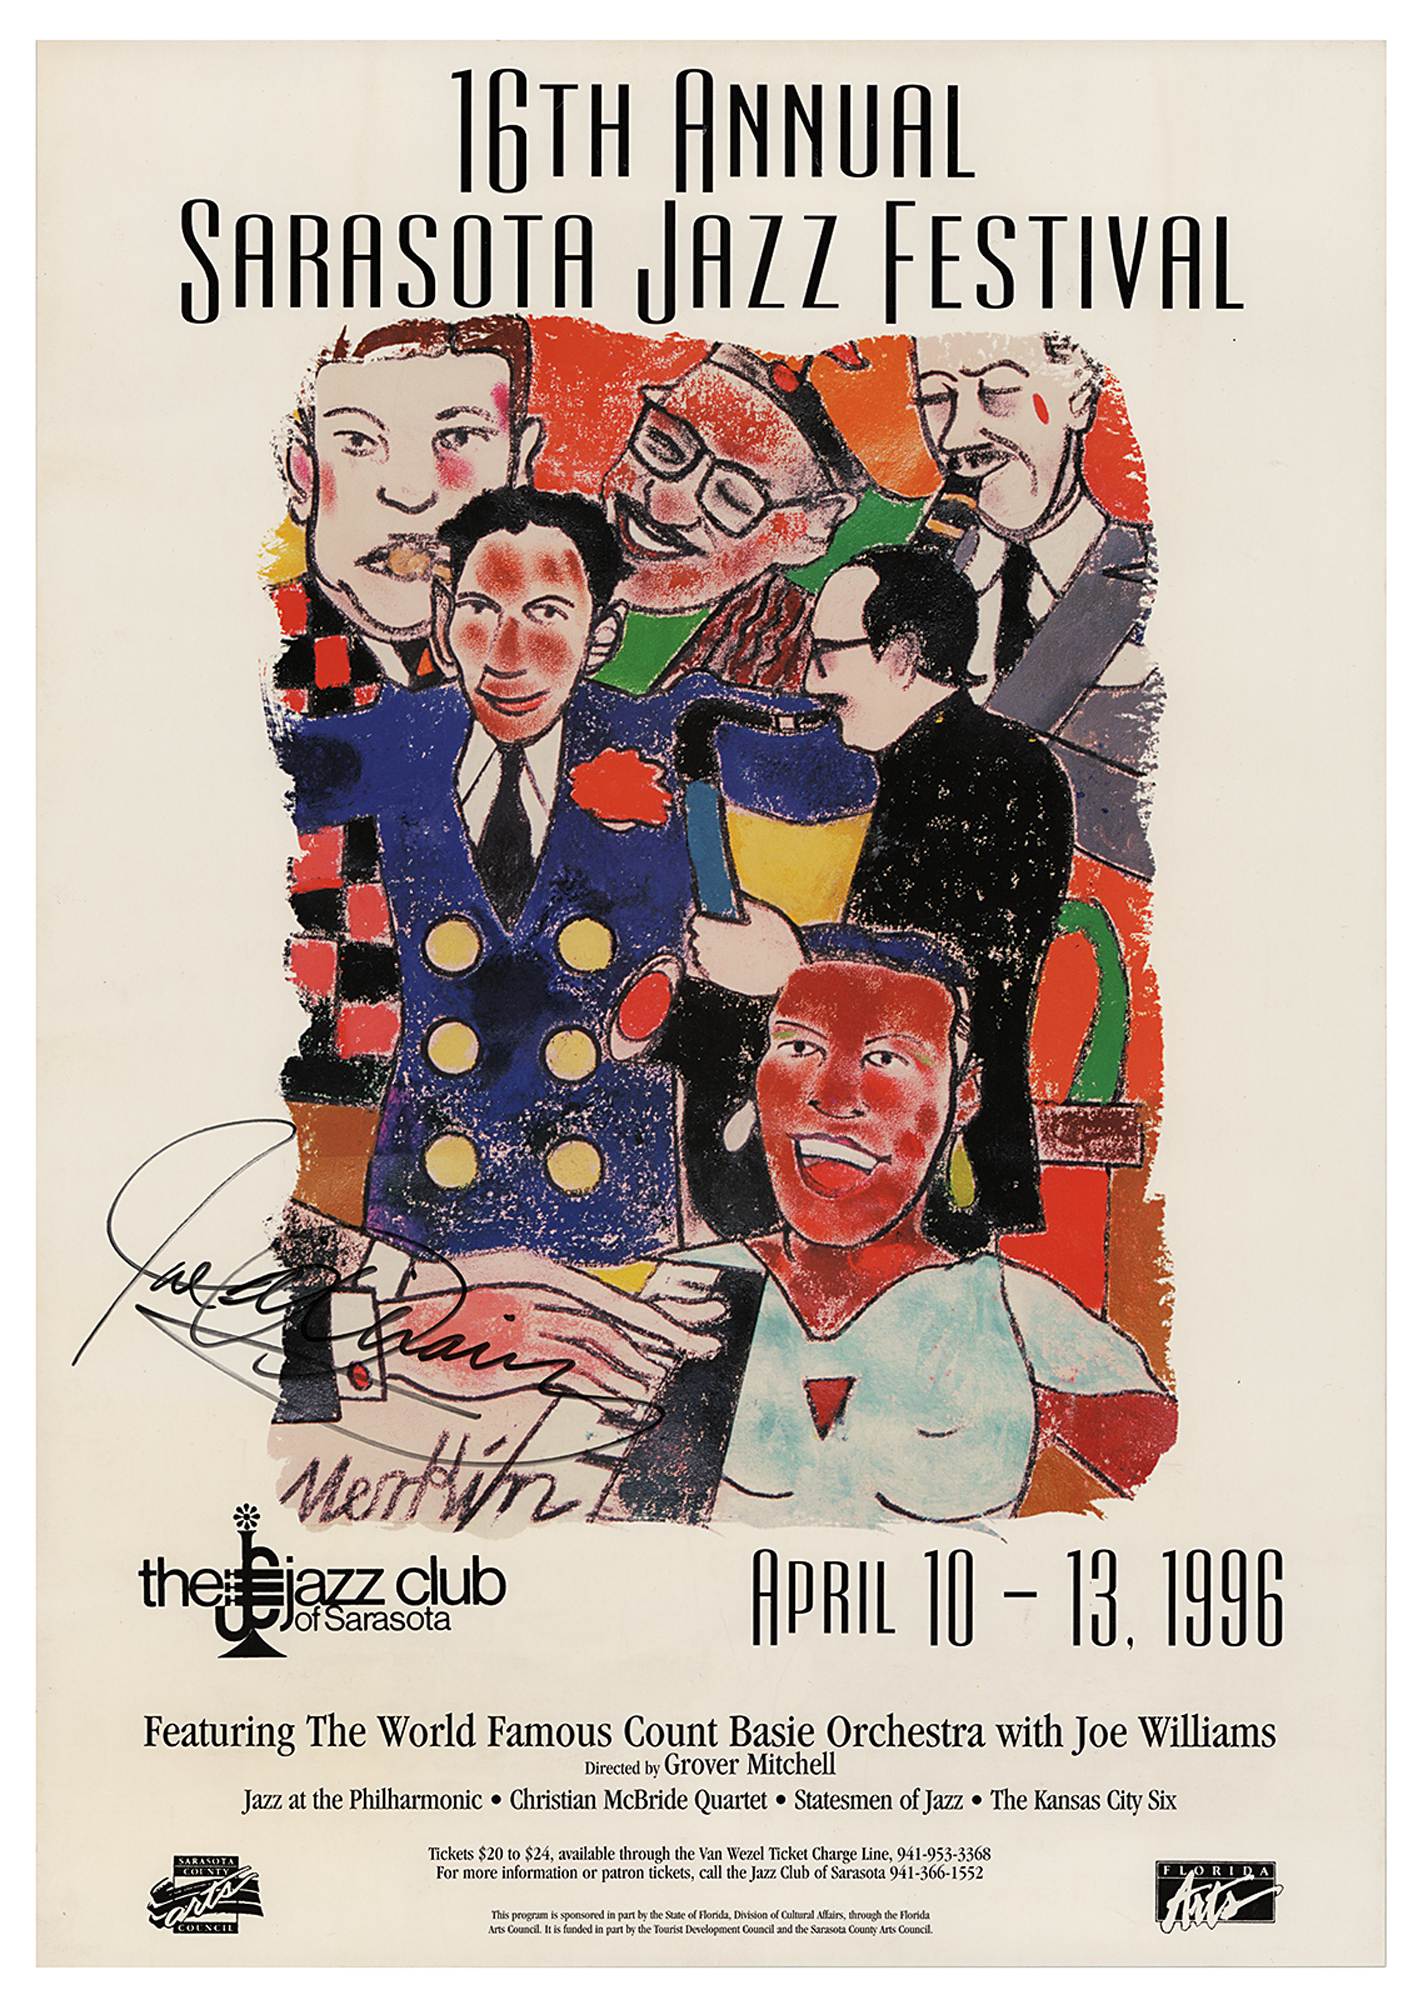 Lot #791 Sarasota Jazz Festival Poster Signed by